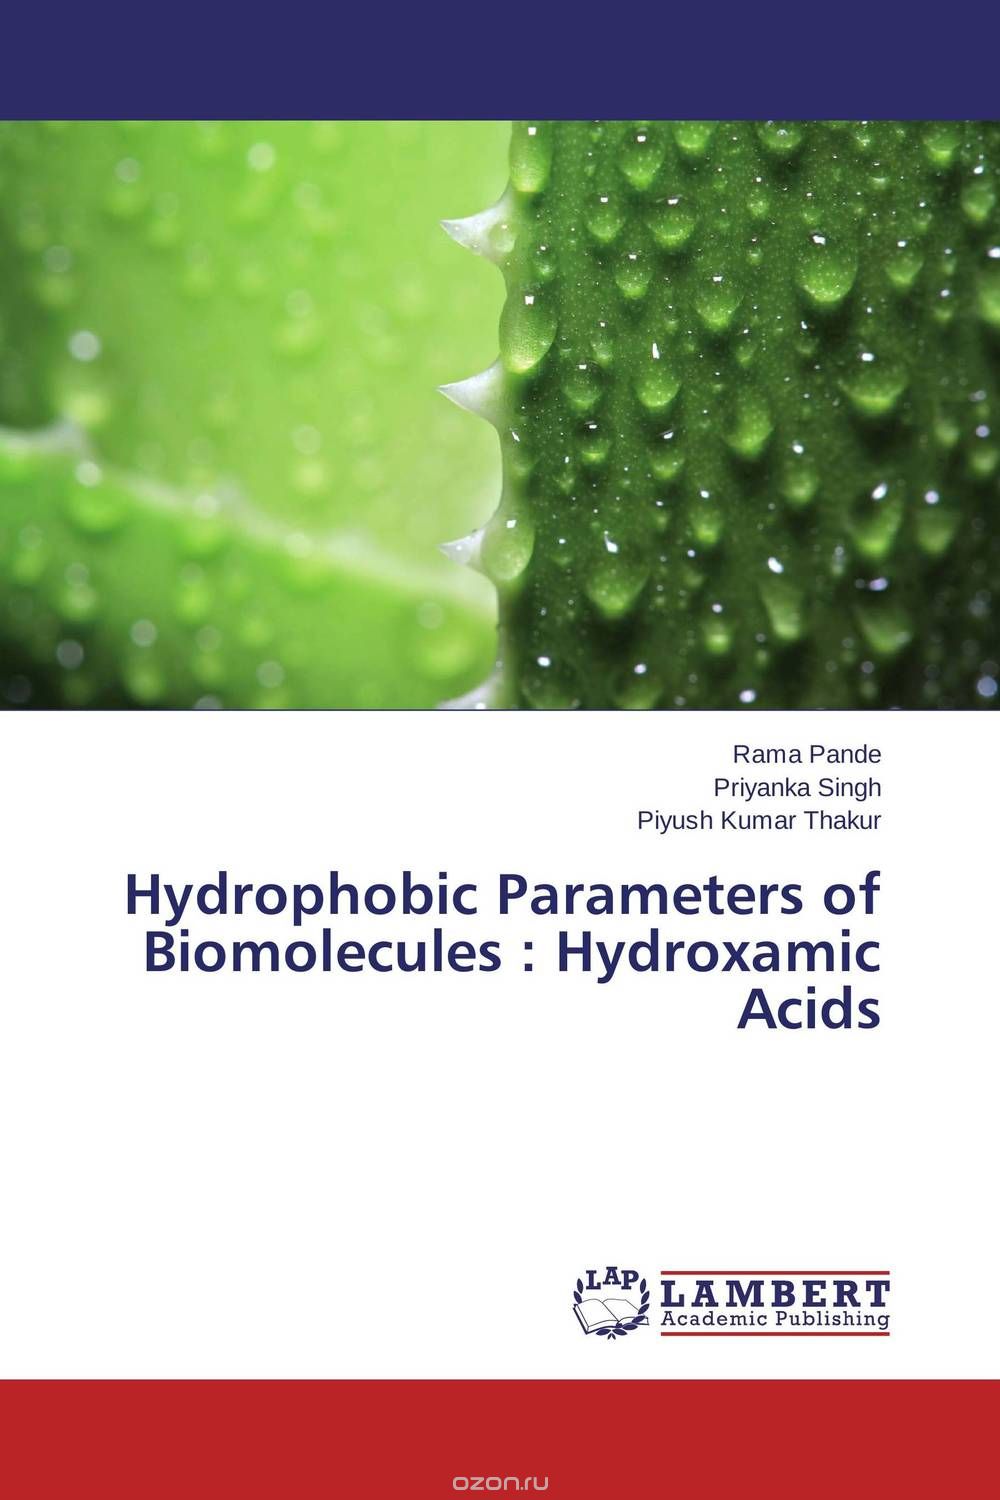 Hydrophobic Parameters of Biomolecules : Hydroxamic Acids